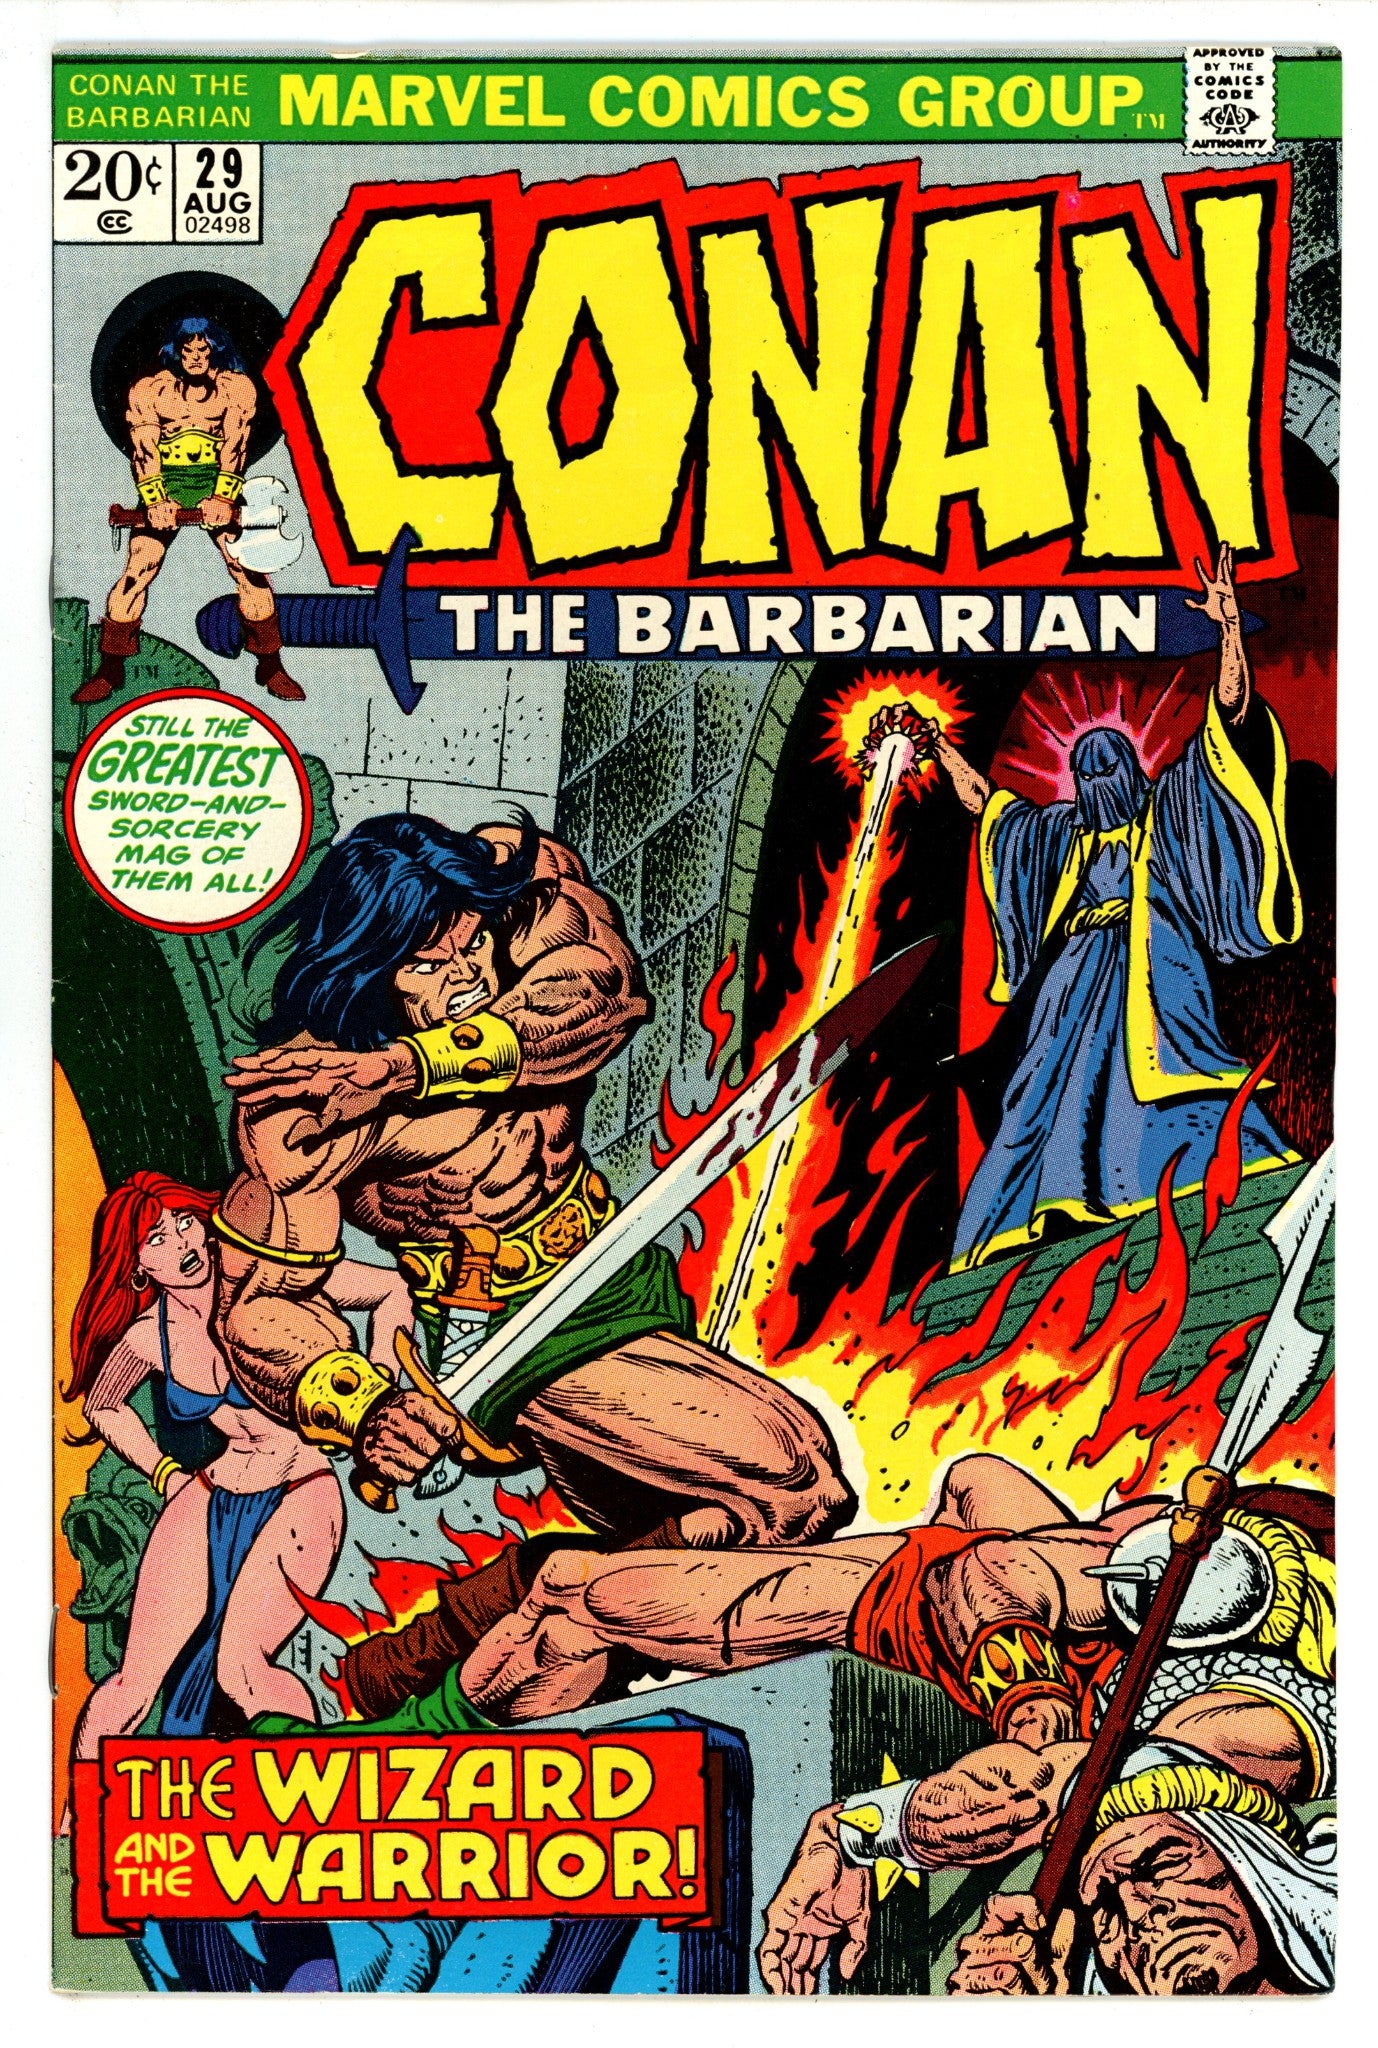 Conan the Barbarian Vol 1 29 VF (8.0) (1973) 